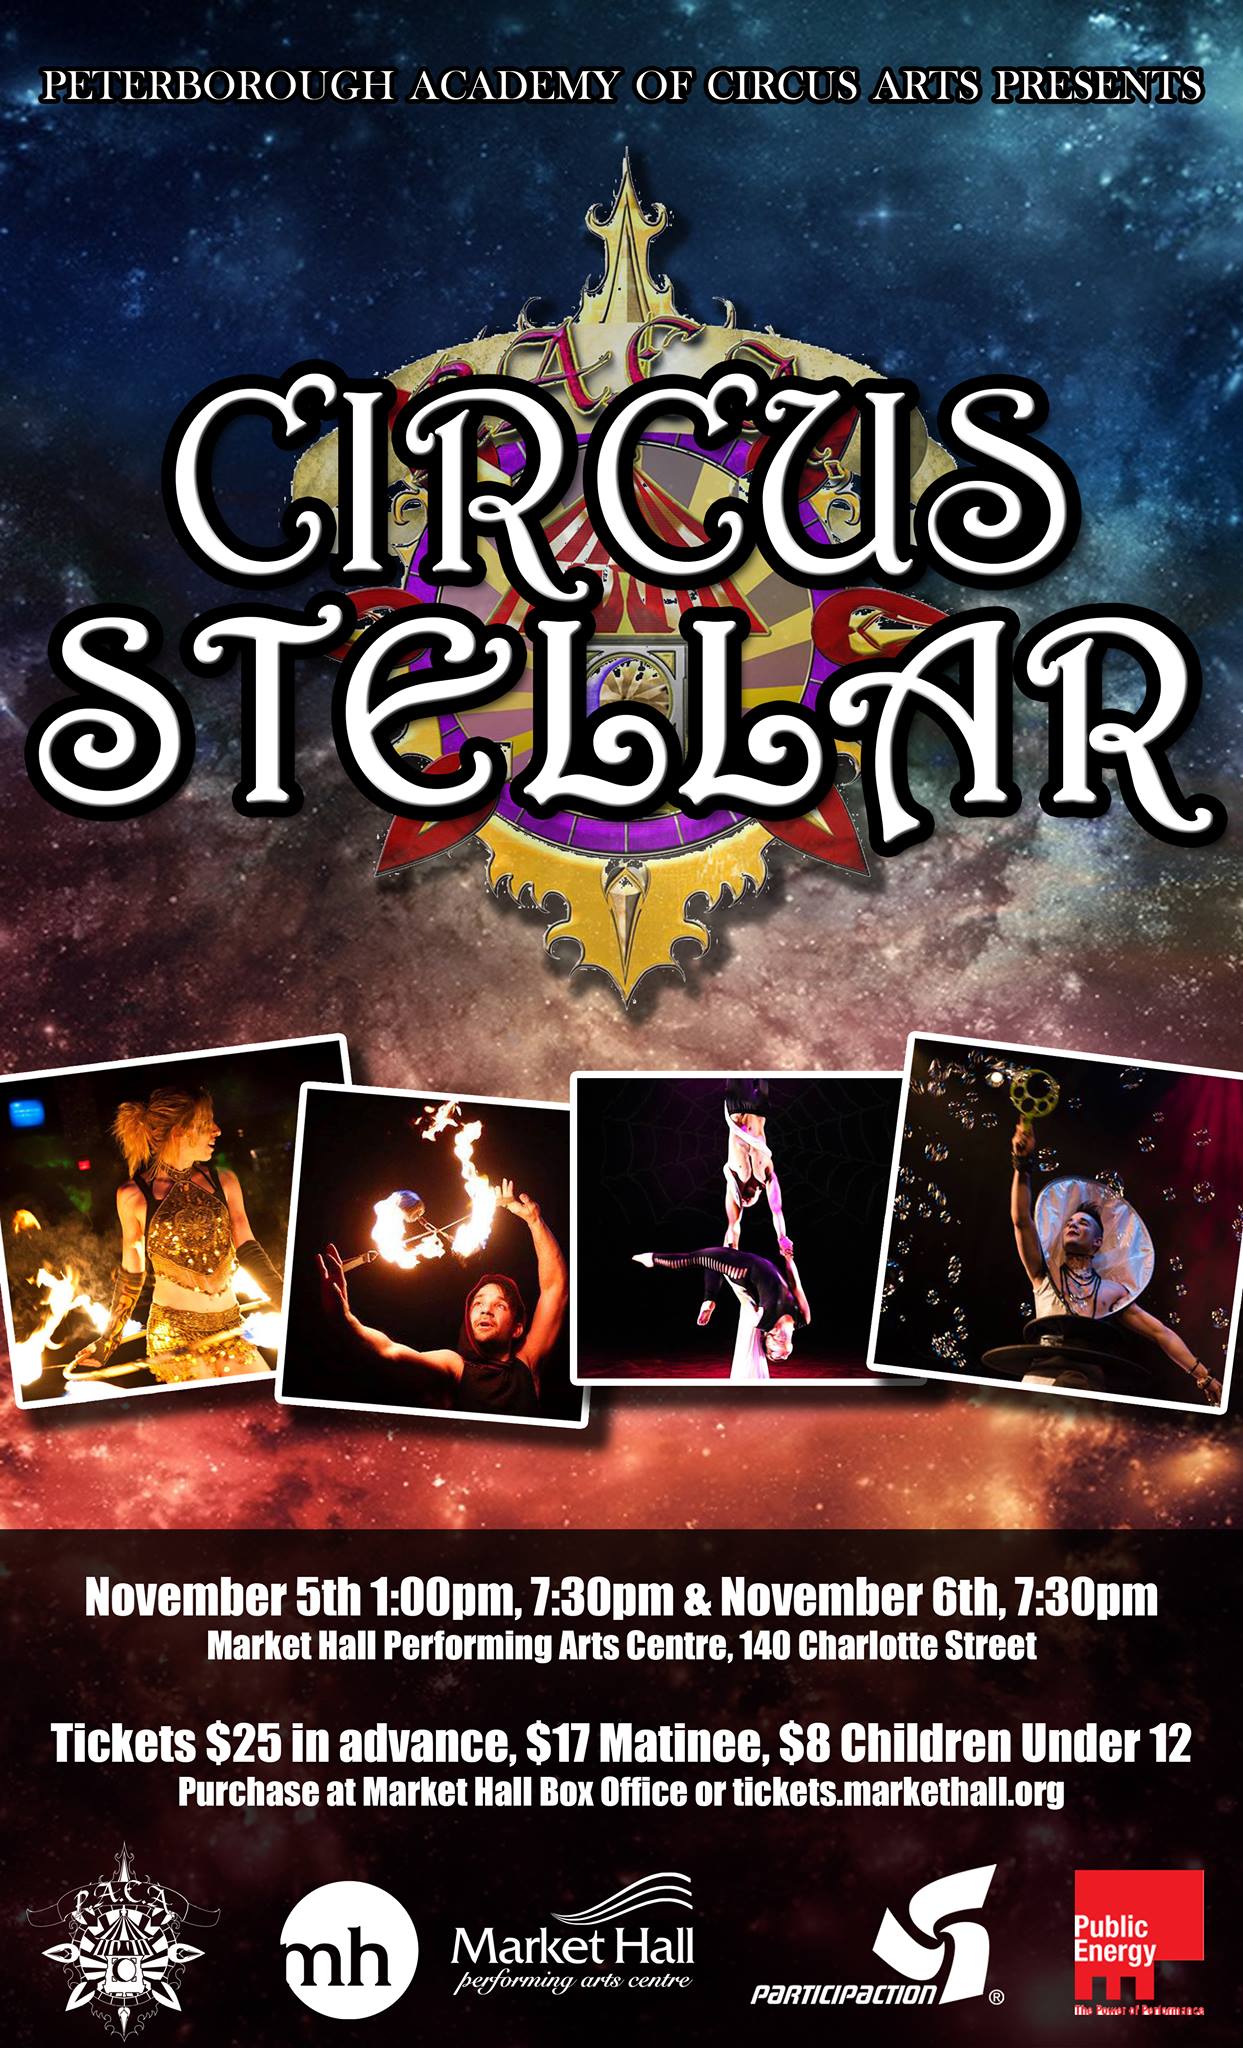 Peterborough Academy of Circus Arts: Circus Stellar  in the photo.